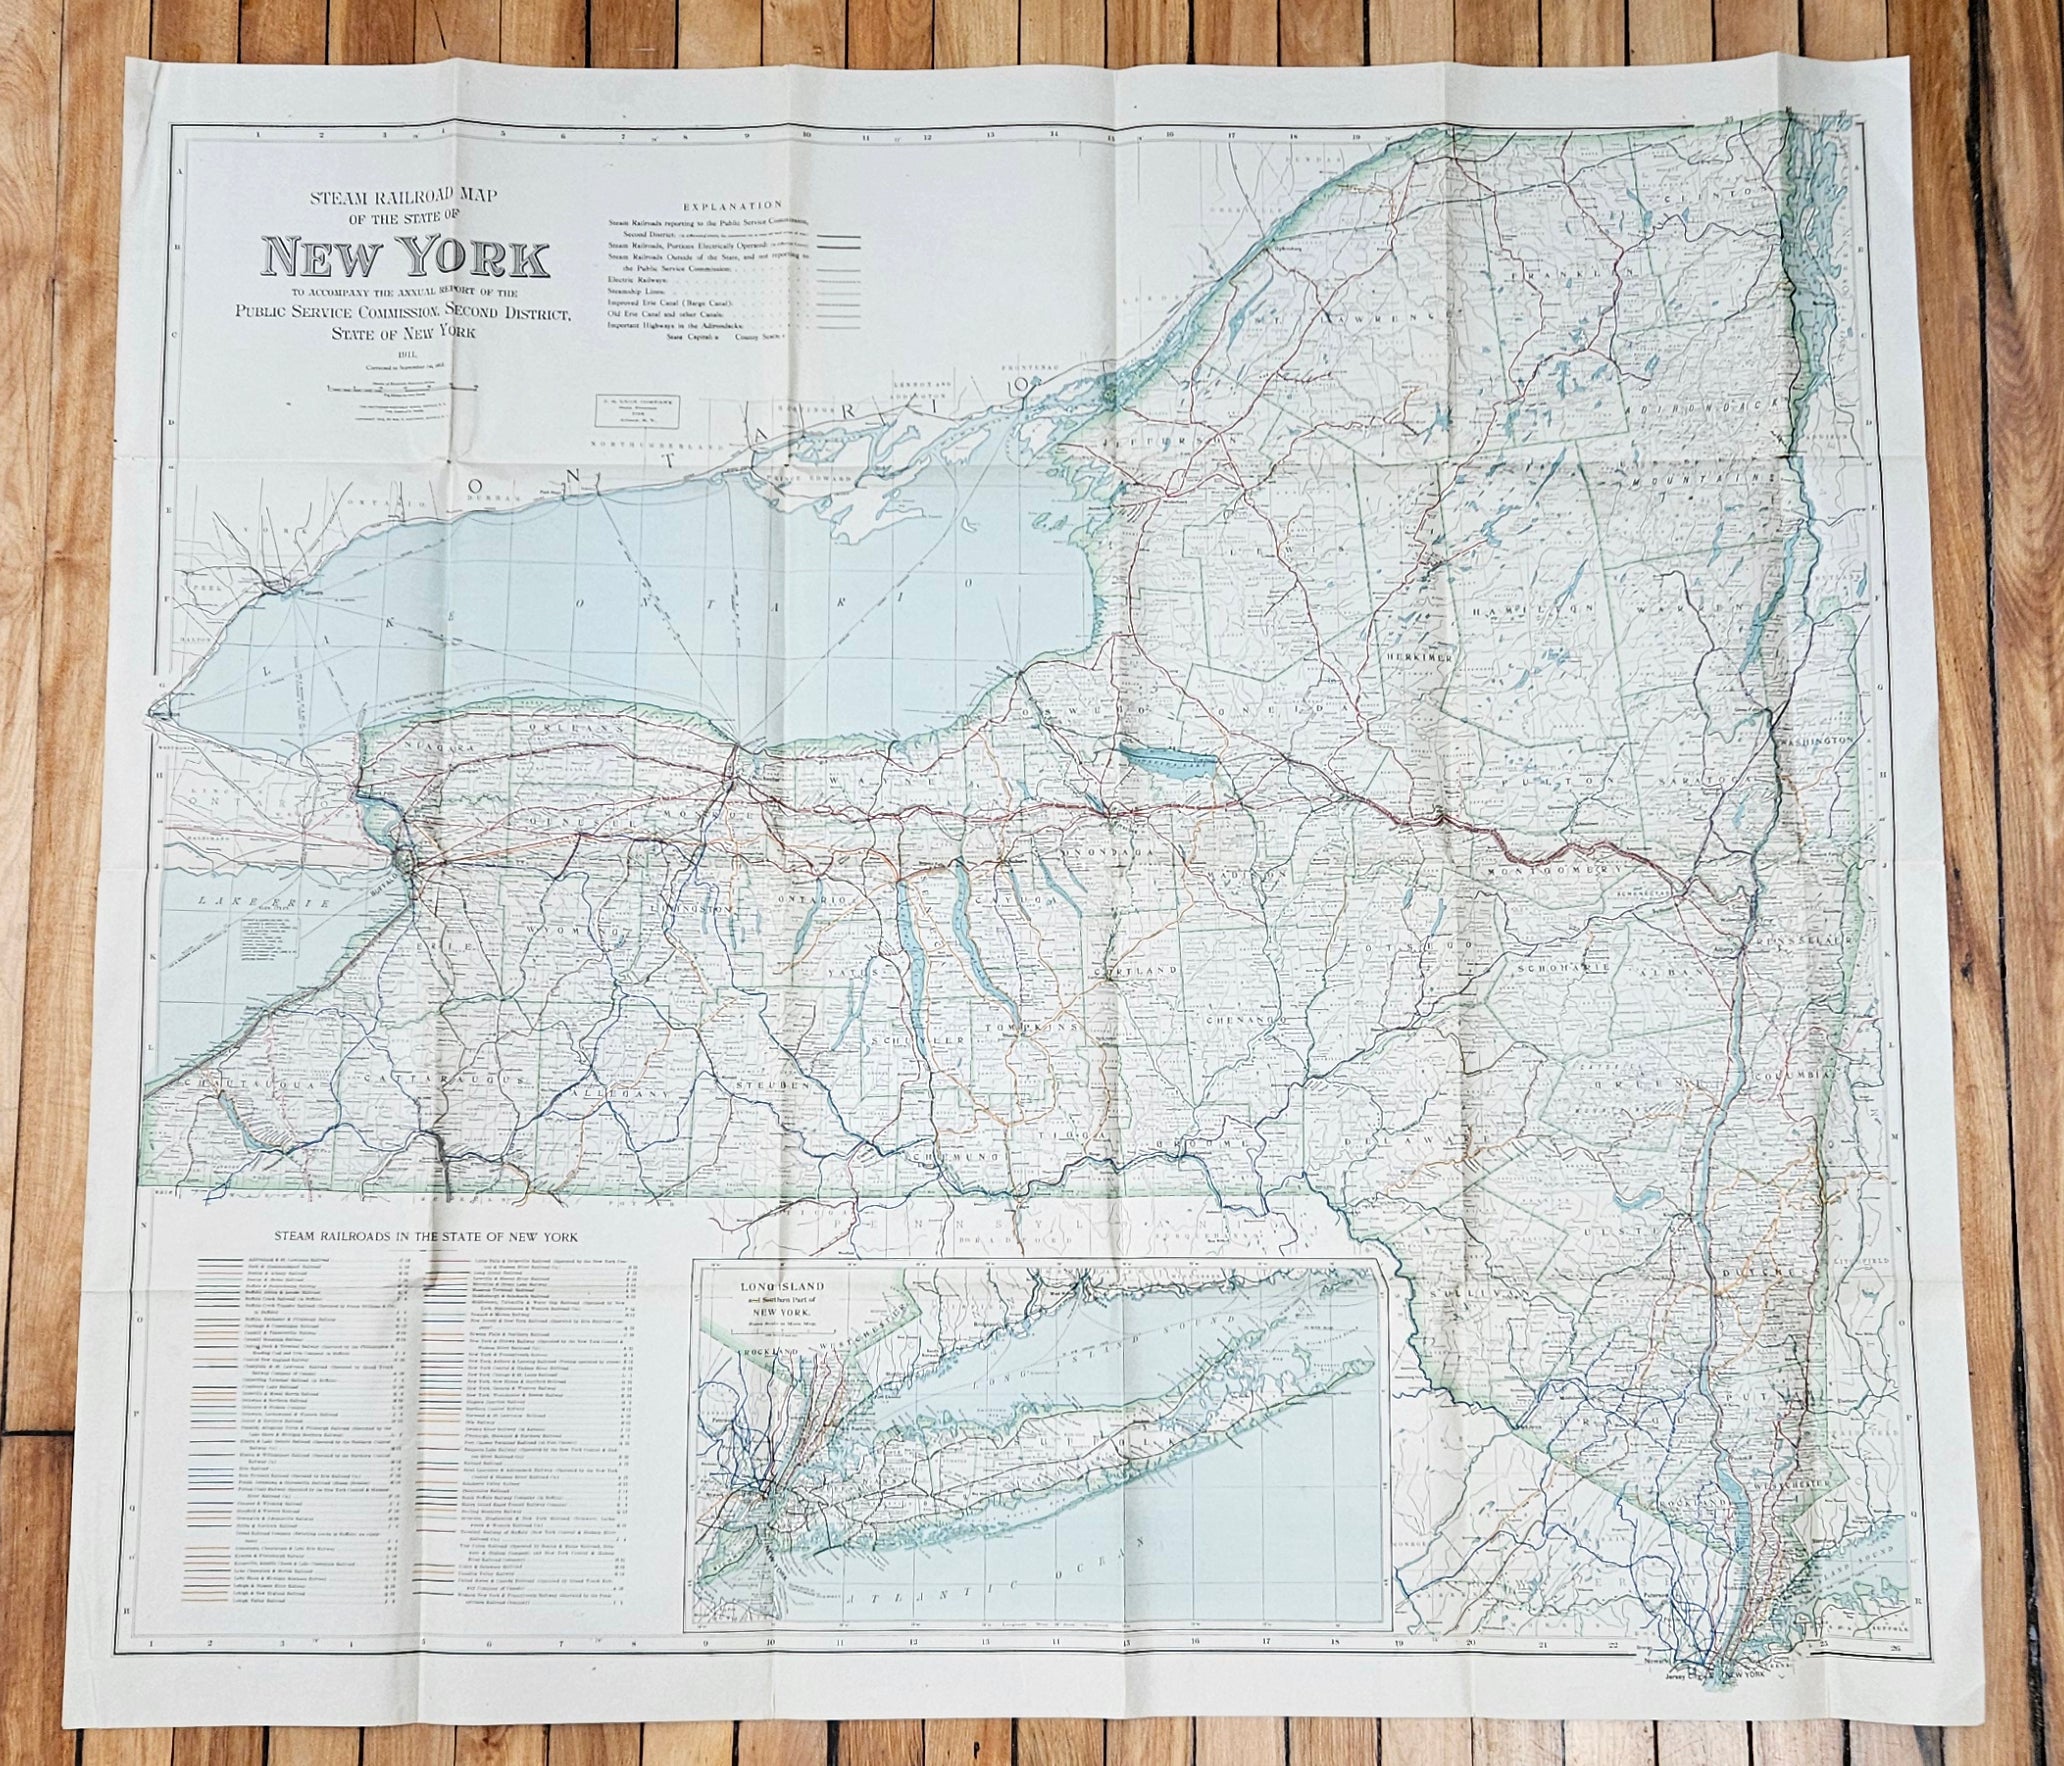 New York State Stream Railroad Map 1912